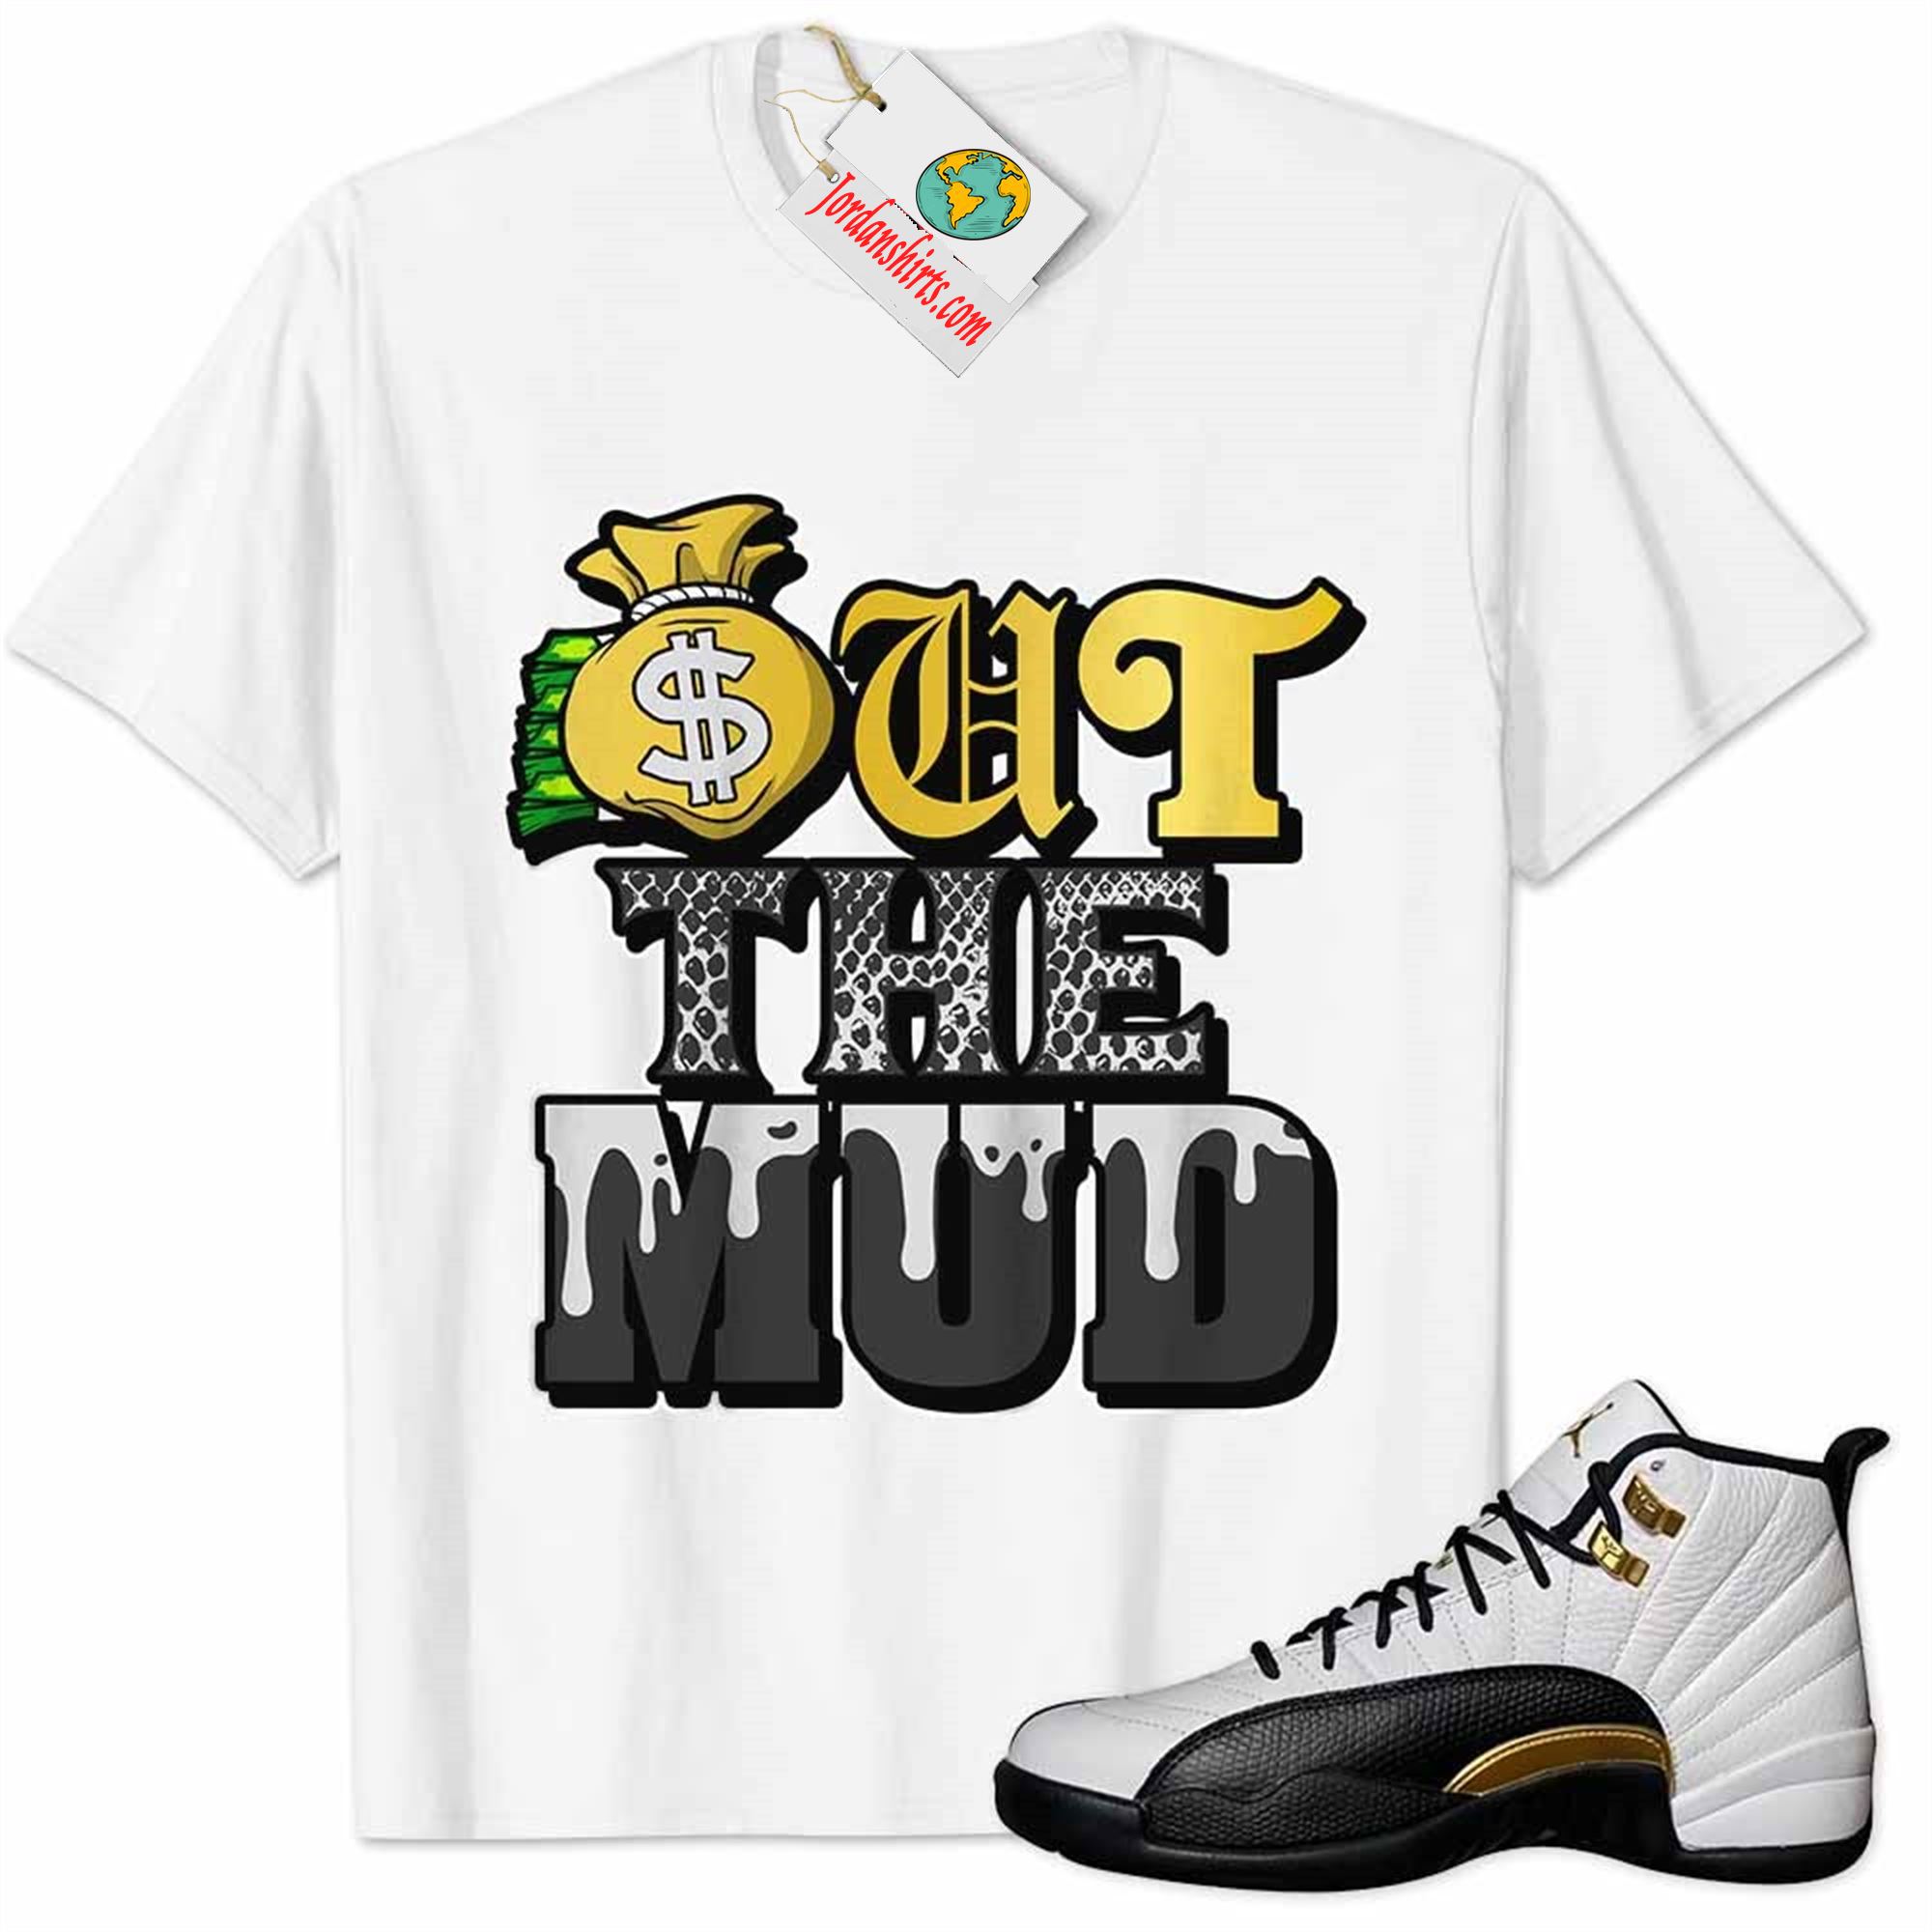 Jordan 12 Shirt, Jordan 12 Royalty Shirt Out The Mud Money Bag White Full Size Up To 5xl